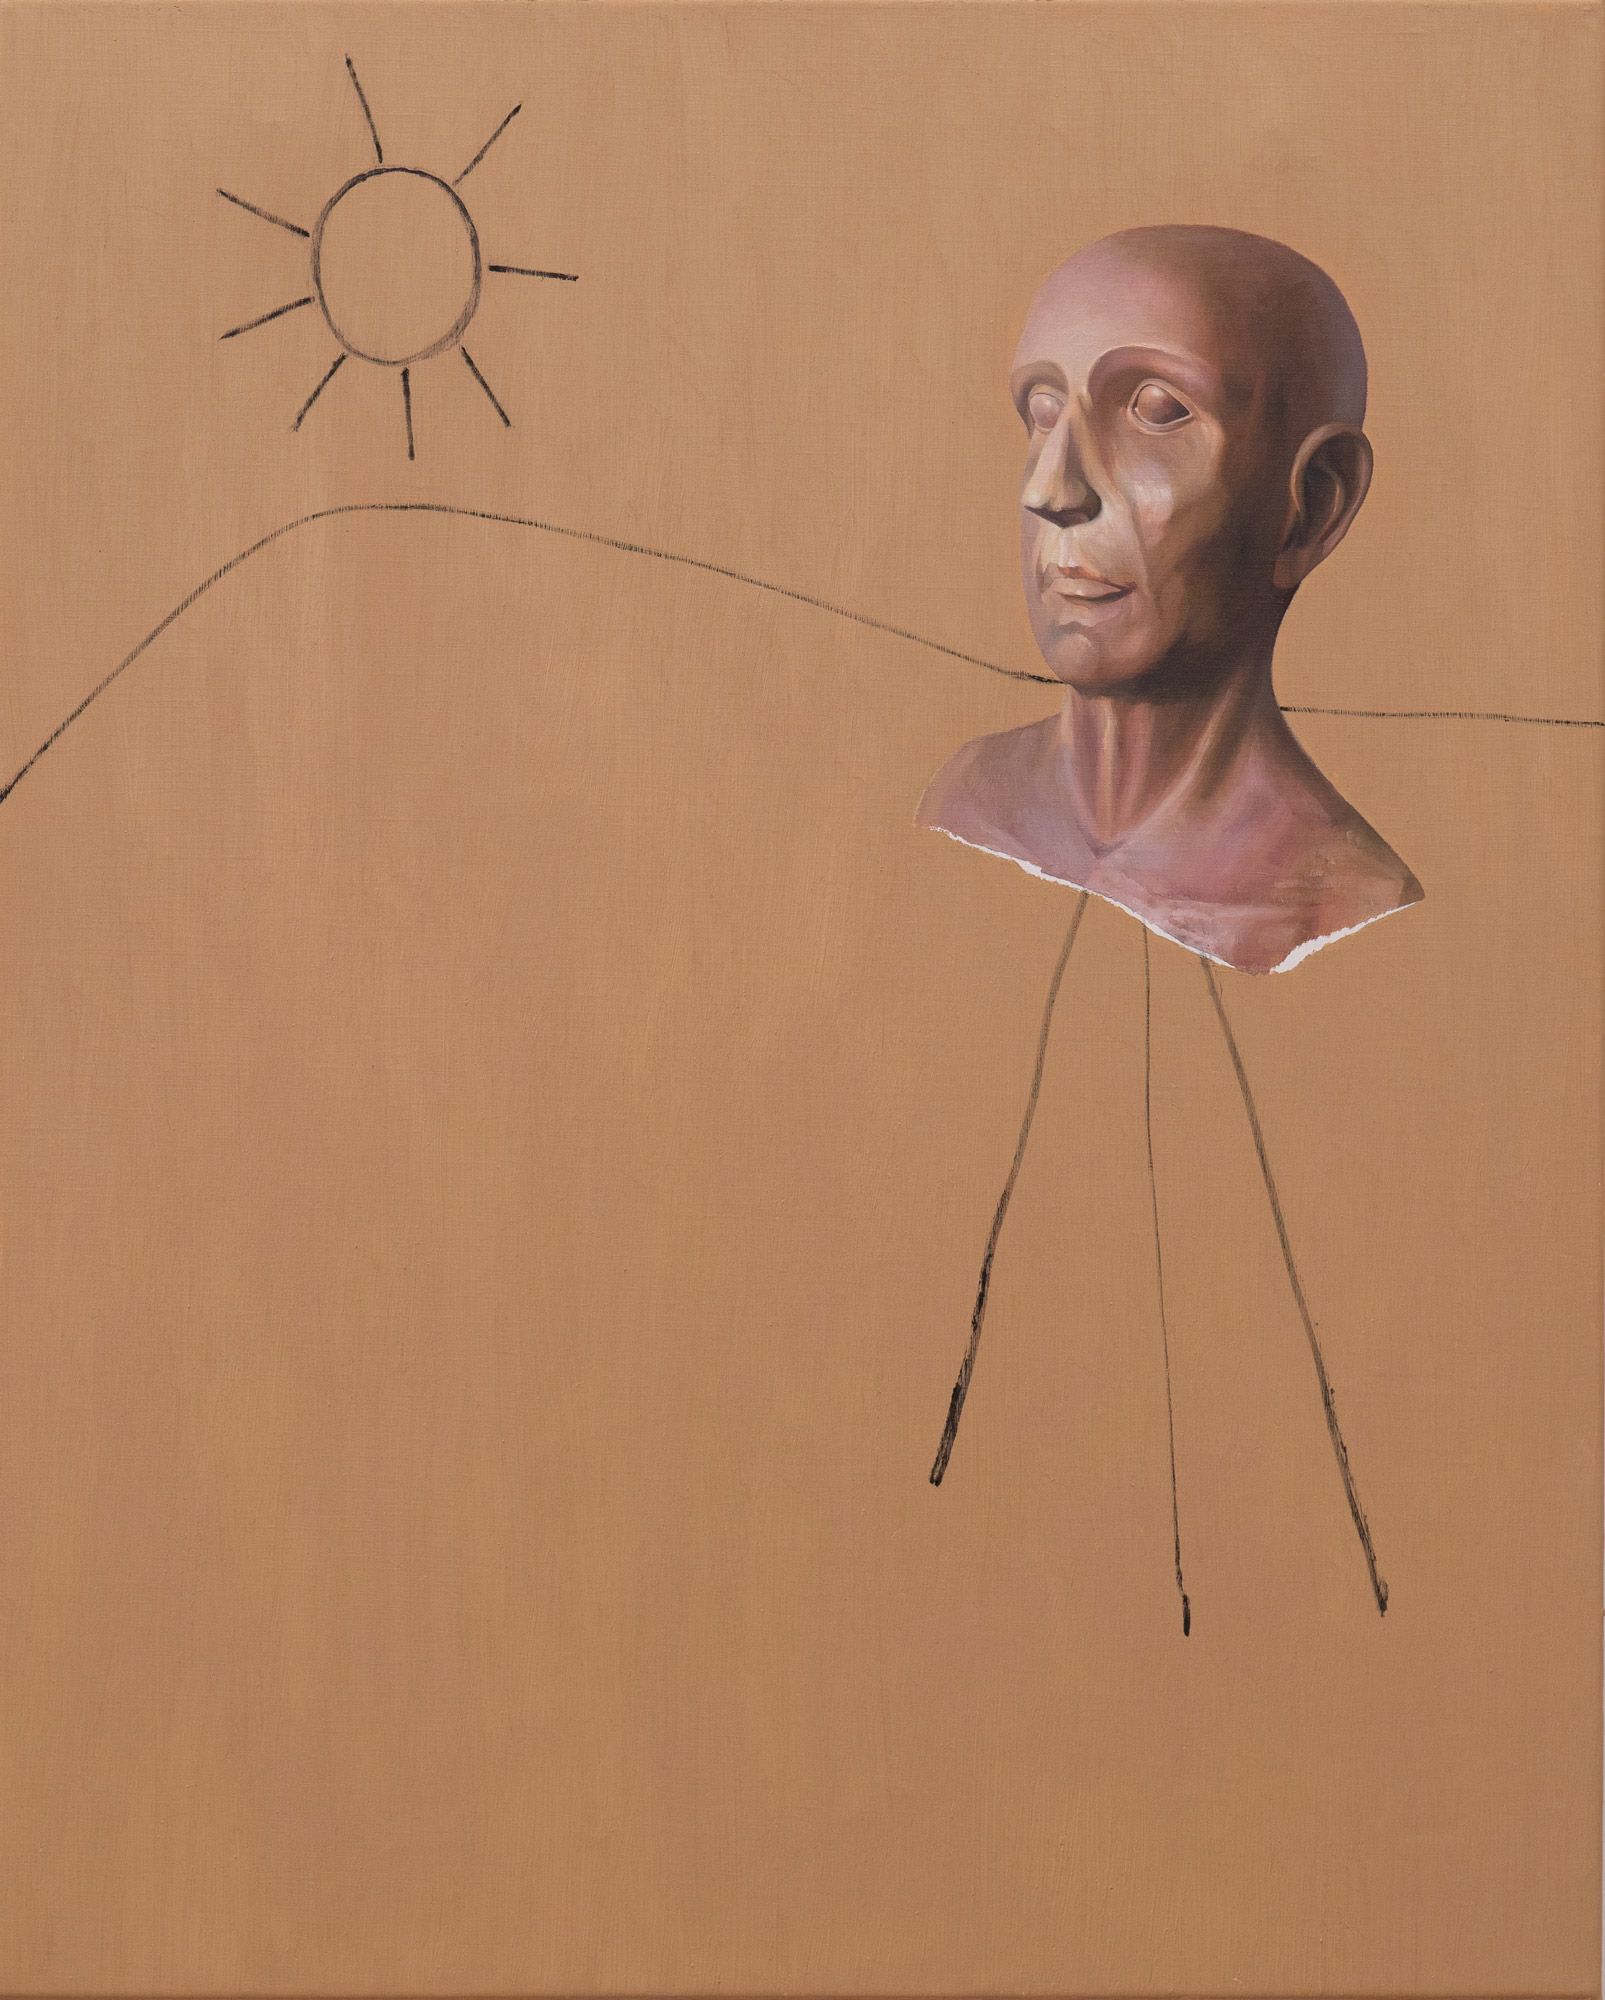 Minimalist reddish-beige art with photorealistic wooden man's face on a tripod